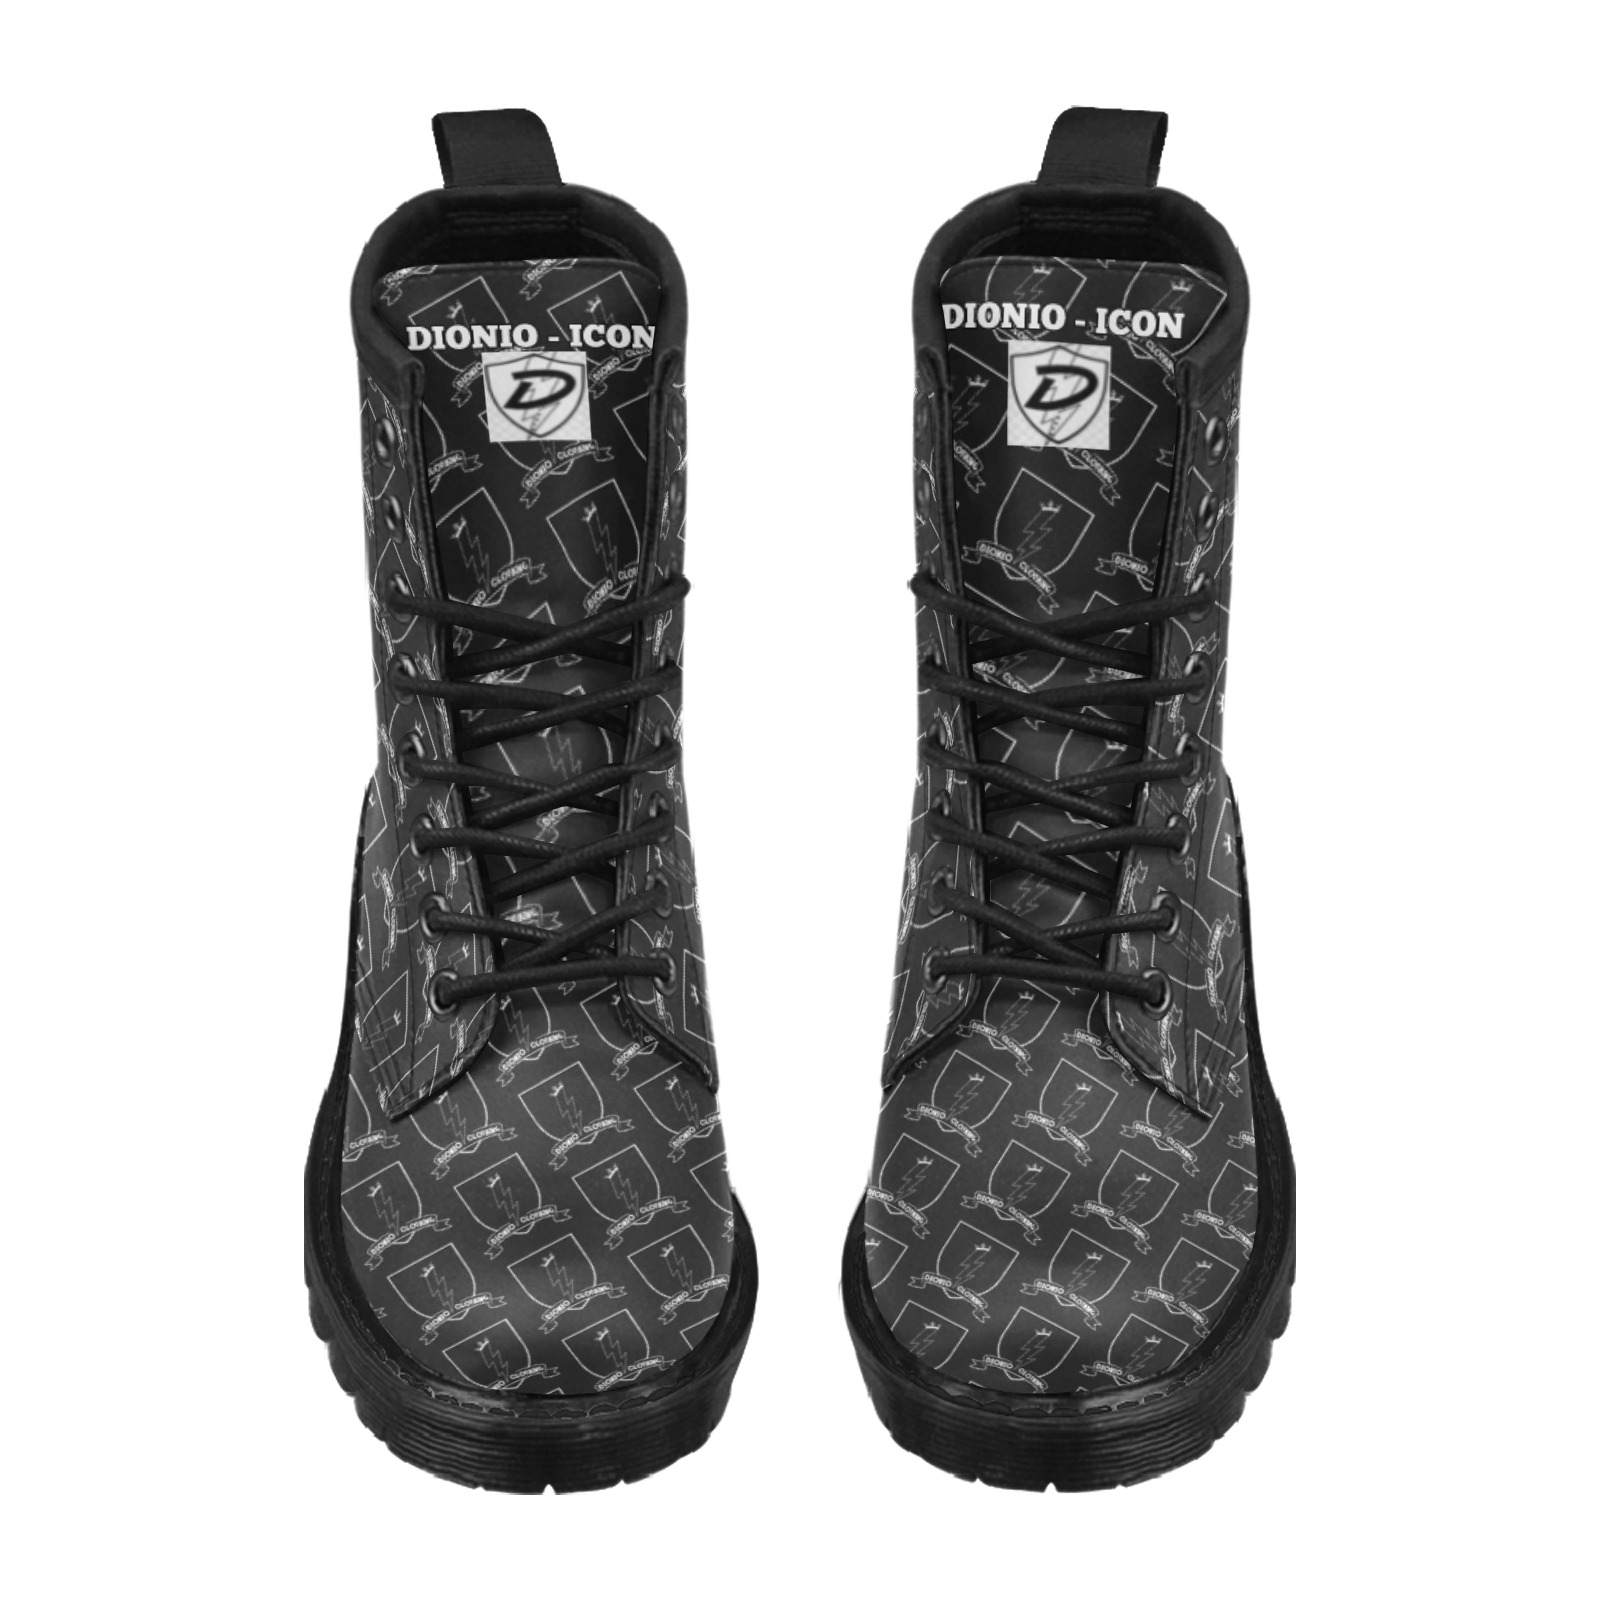 DIONIO - Ladies' DIONIO ICON Boots (Black) Women's PU Leather Martin Boots (Model 402H)